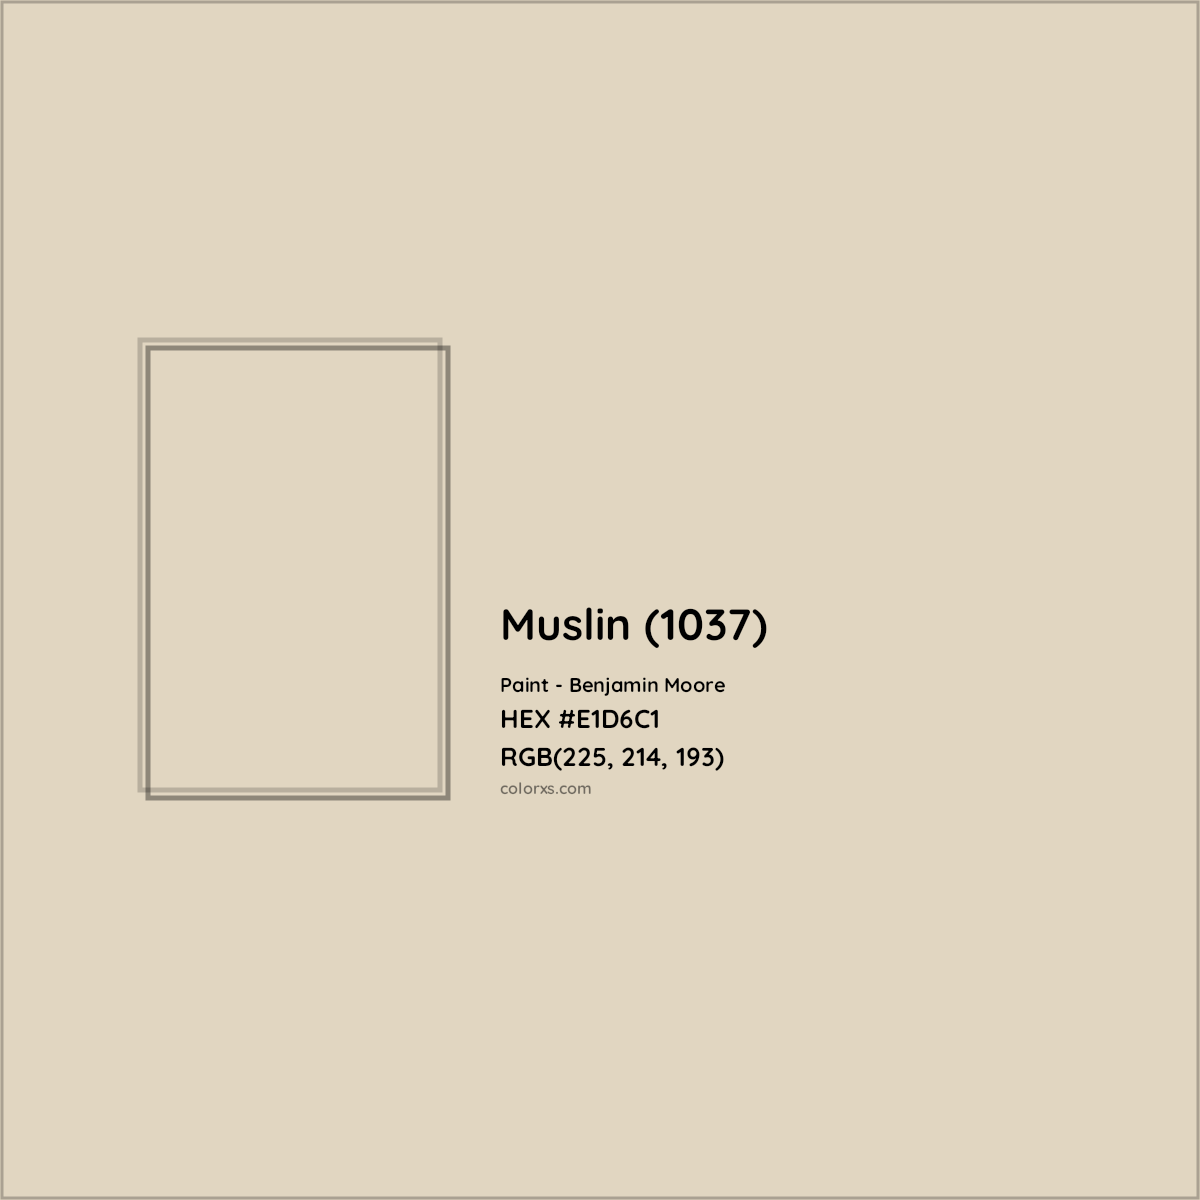 HEX #E1D6C1 Muslin (1037) Paint Benjamin Moore - Color Code